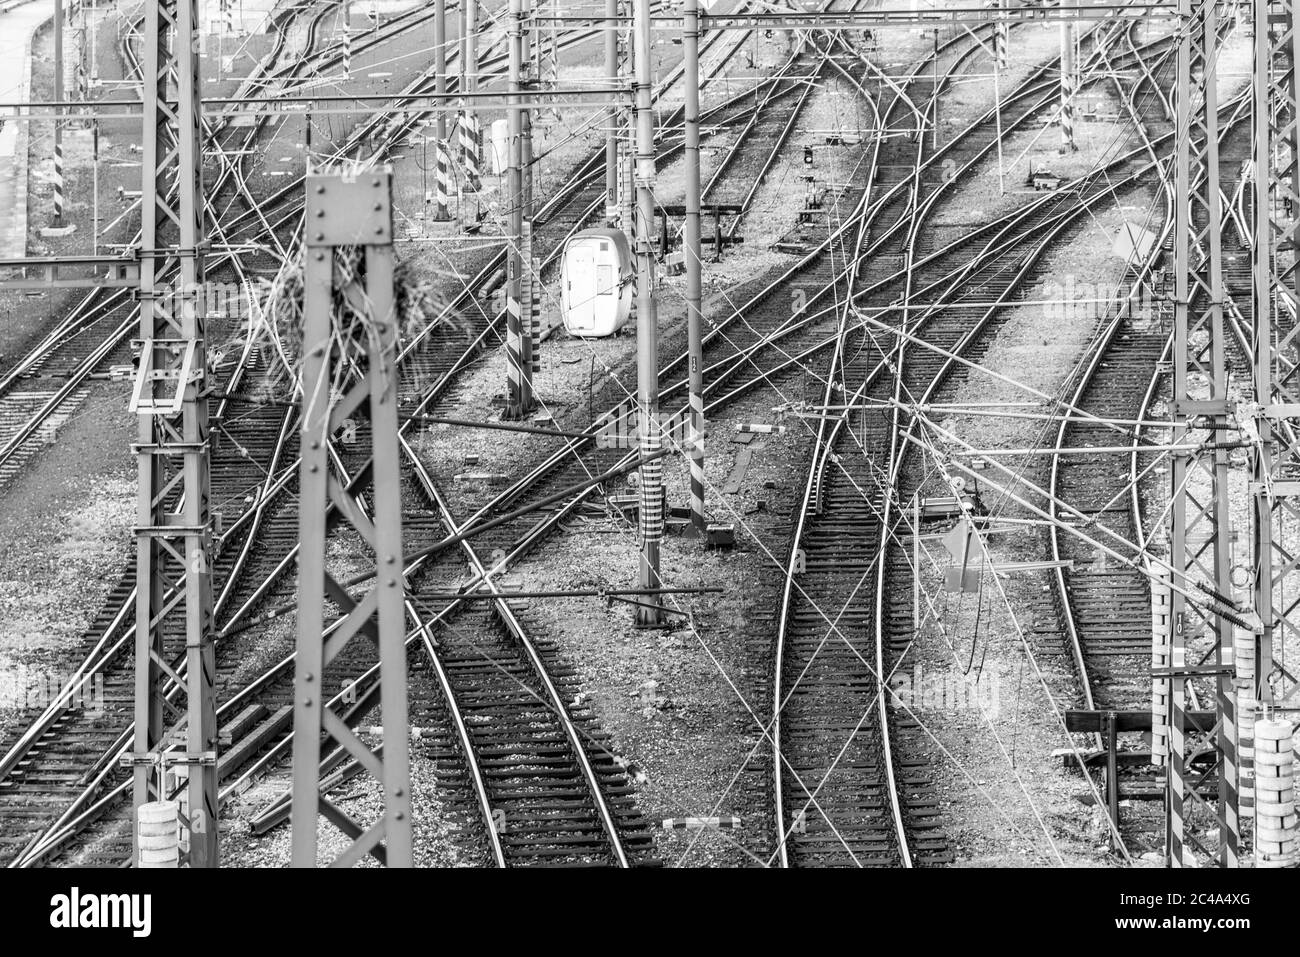 Railroad tangle at large train station. Railway transportation theme. Black and white image. Stock Photo